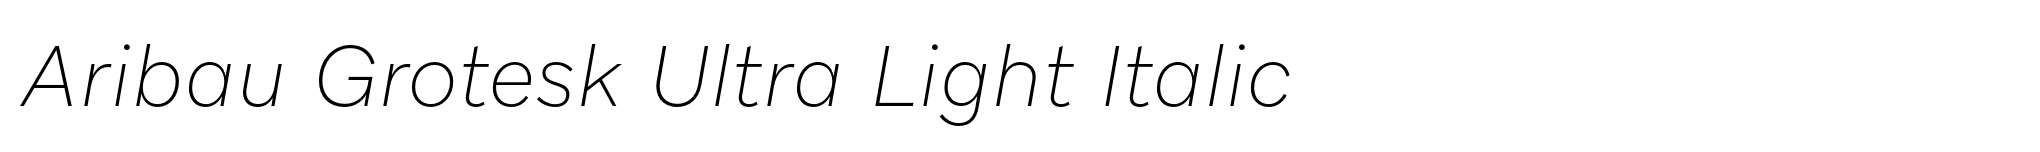 Aribau Grotesk Ultra Light Italic image